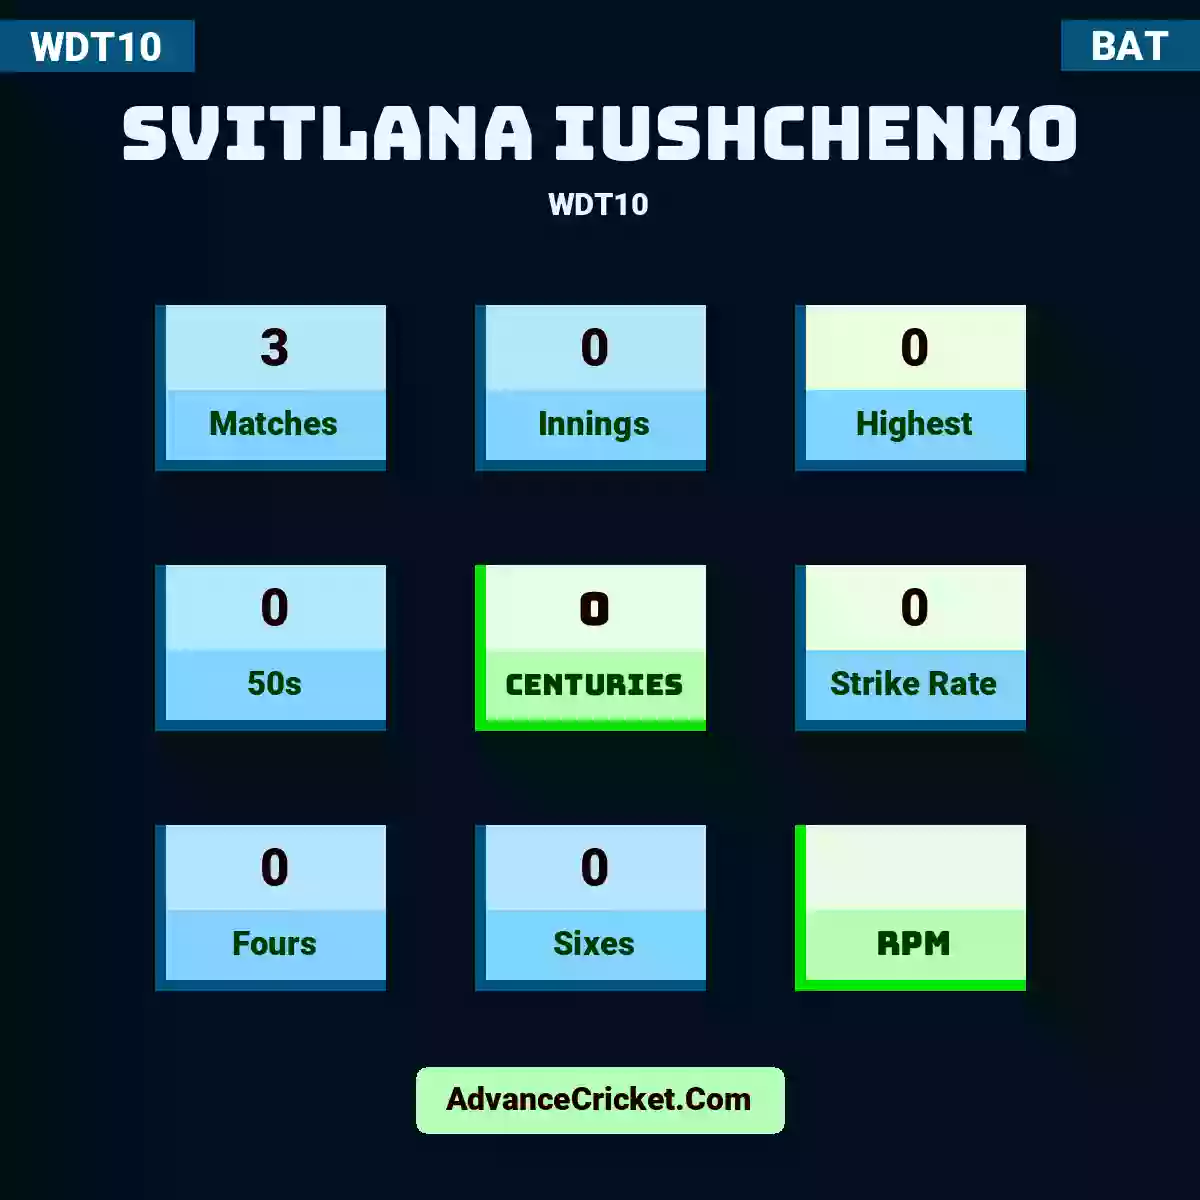 Svitlana Iushchenko WDT10 , Svitlana Iushchenko played 3 matches, scored 0 runs as highest, 0 half-centuries, and 0 centuries, with a strike rate of 0. S.Iushchenko hit 0 fours and 0 sixes.